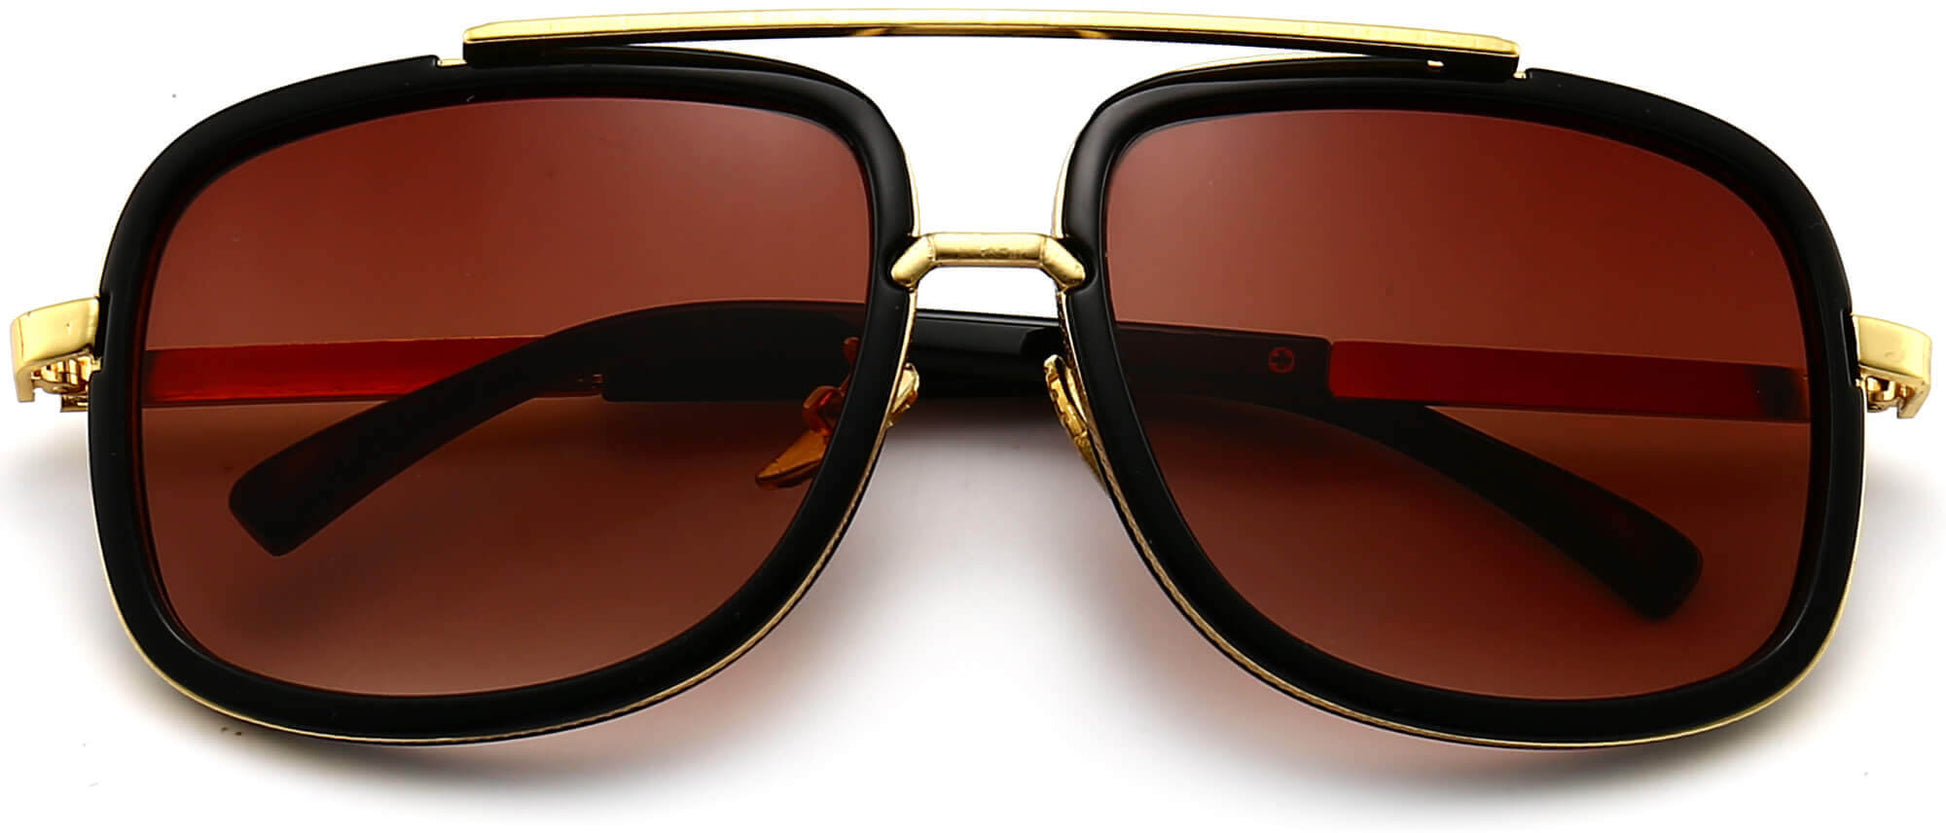 Gael Black Plastic Sunglasses from ANRRI, closed view